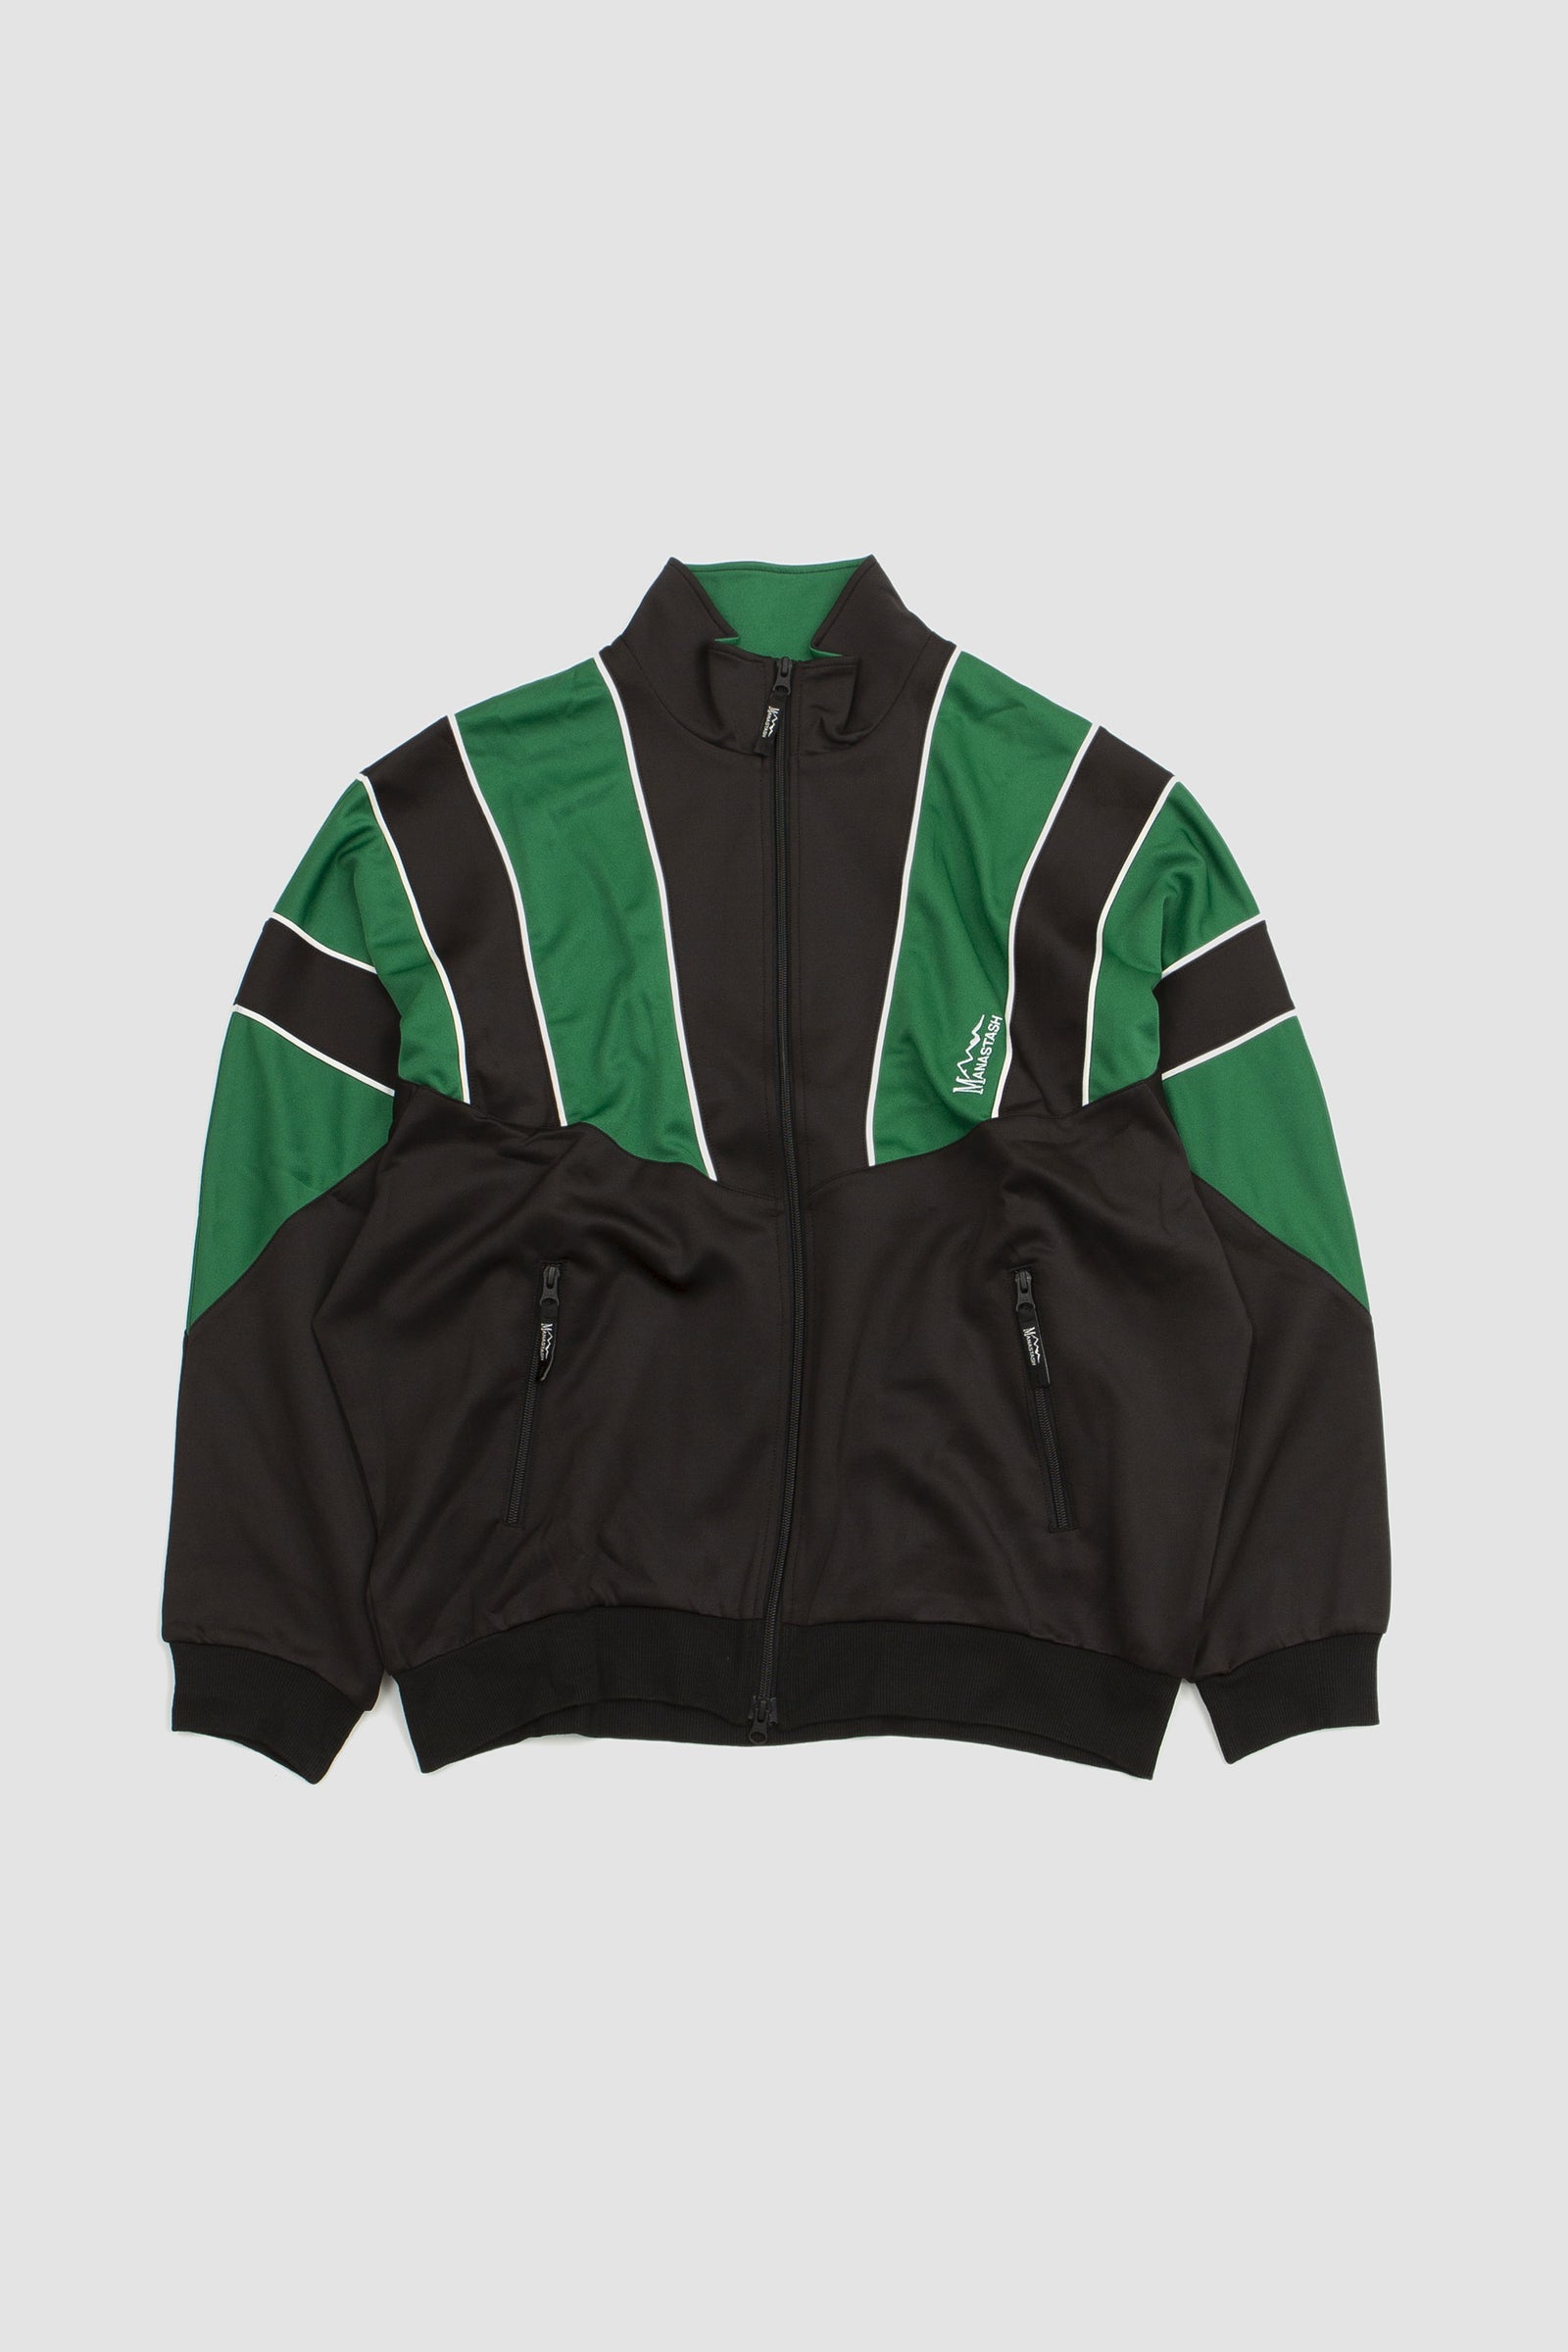 SPORTIVO [Track jacket green]